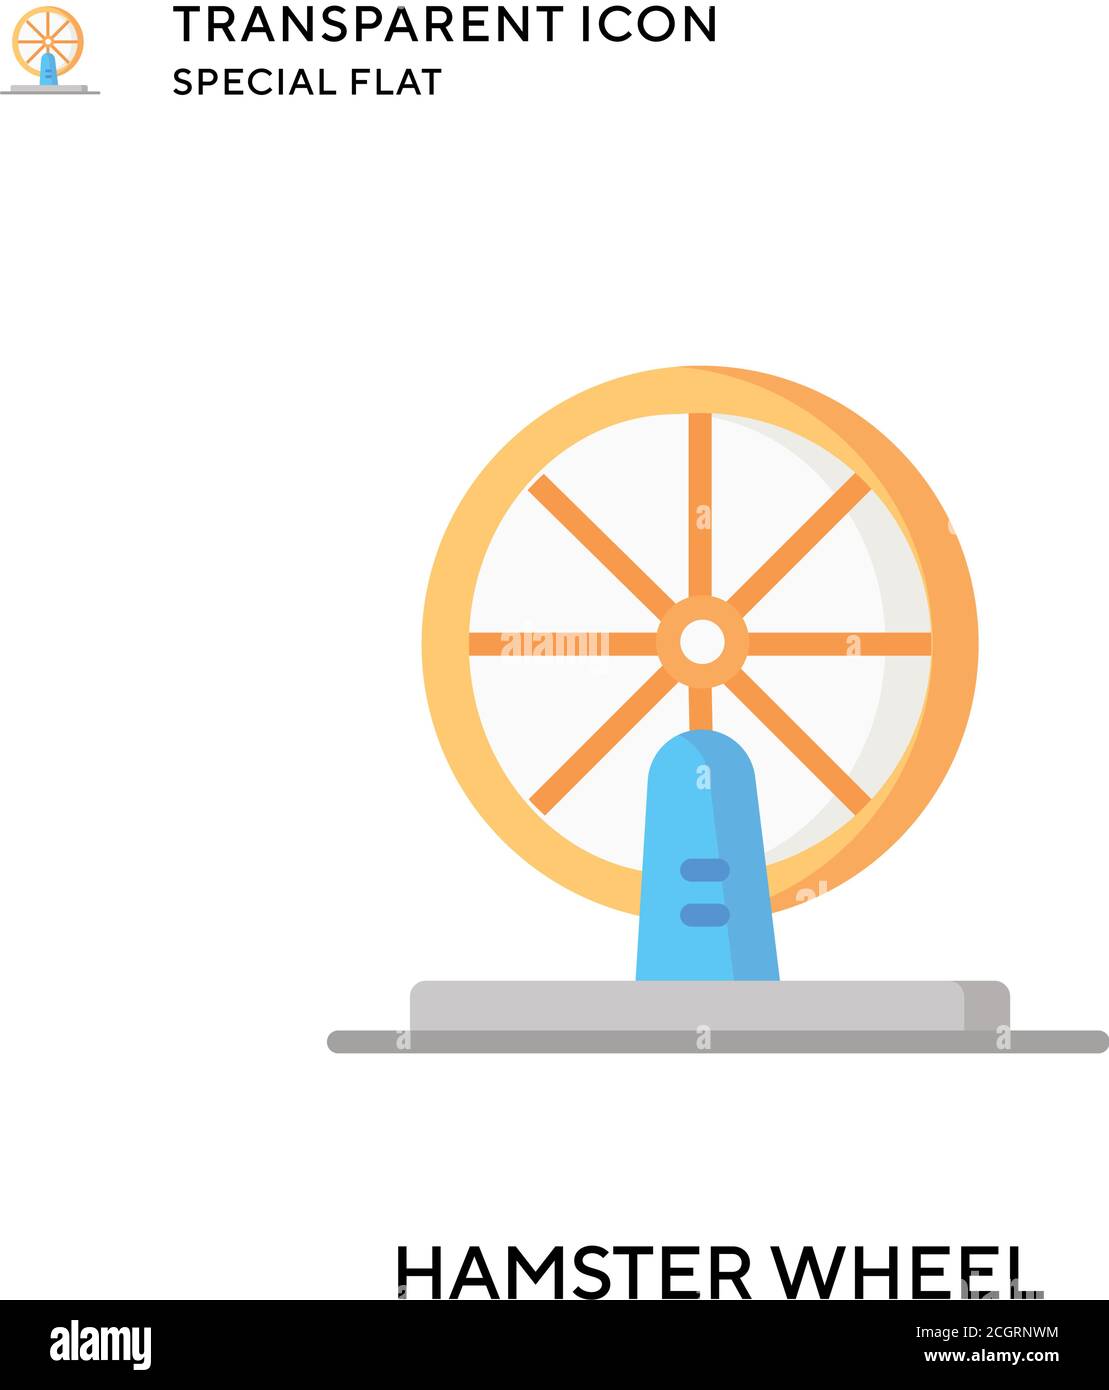 Hamster wheel vector icon. Flat style illustration. EPS 10 vector. Stock Vector